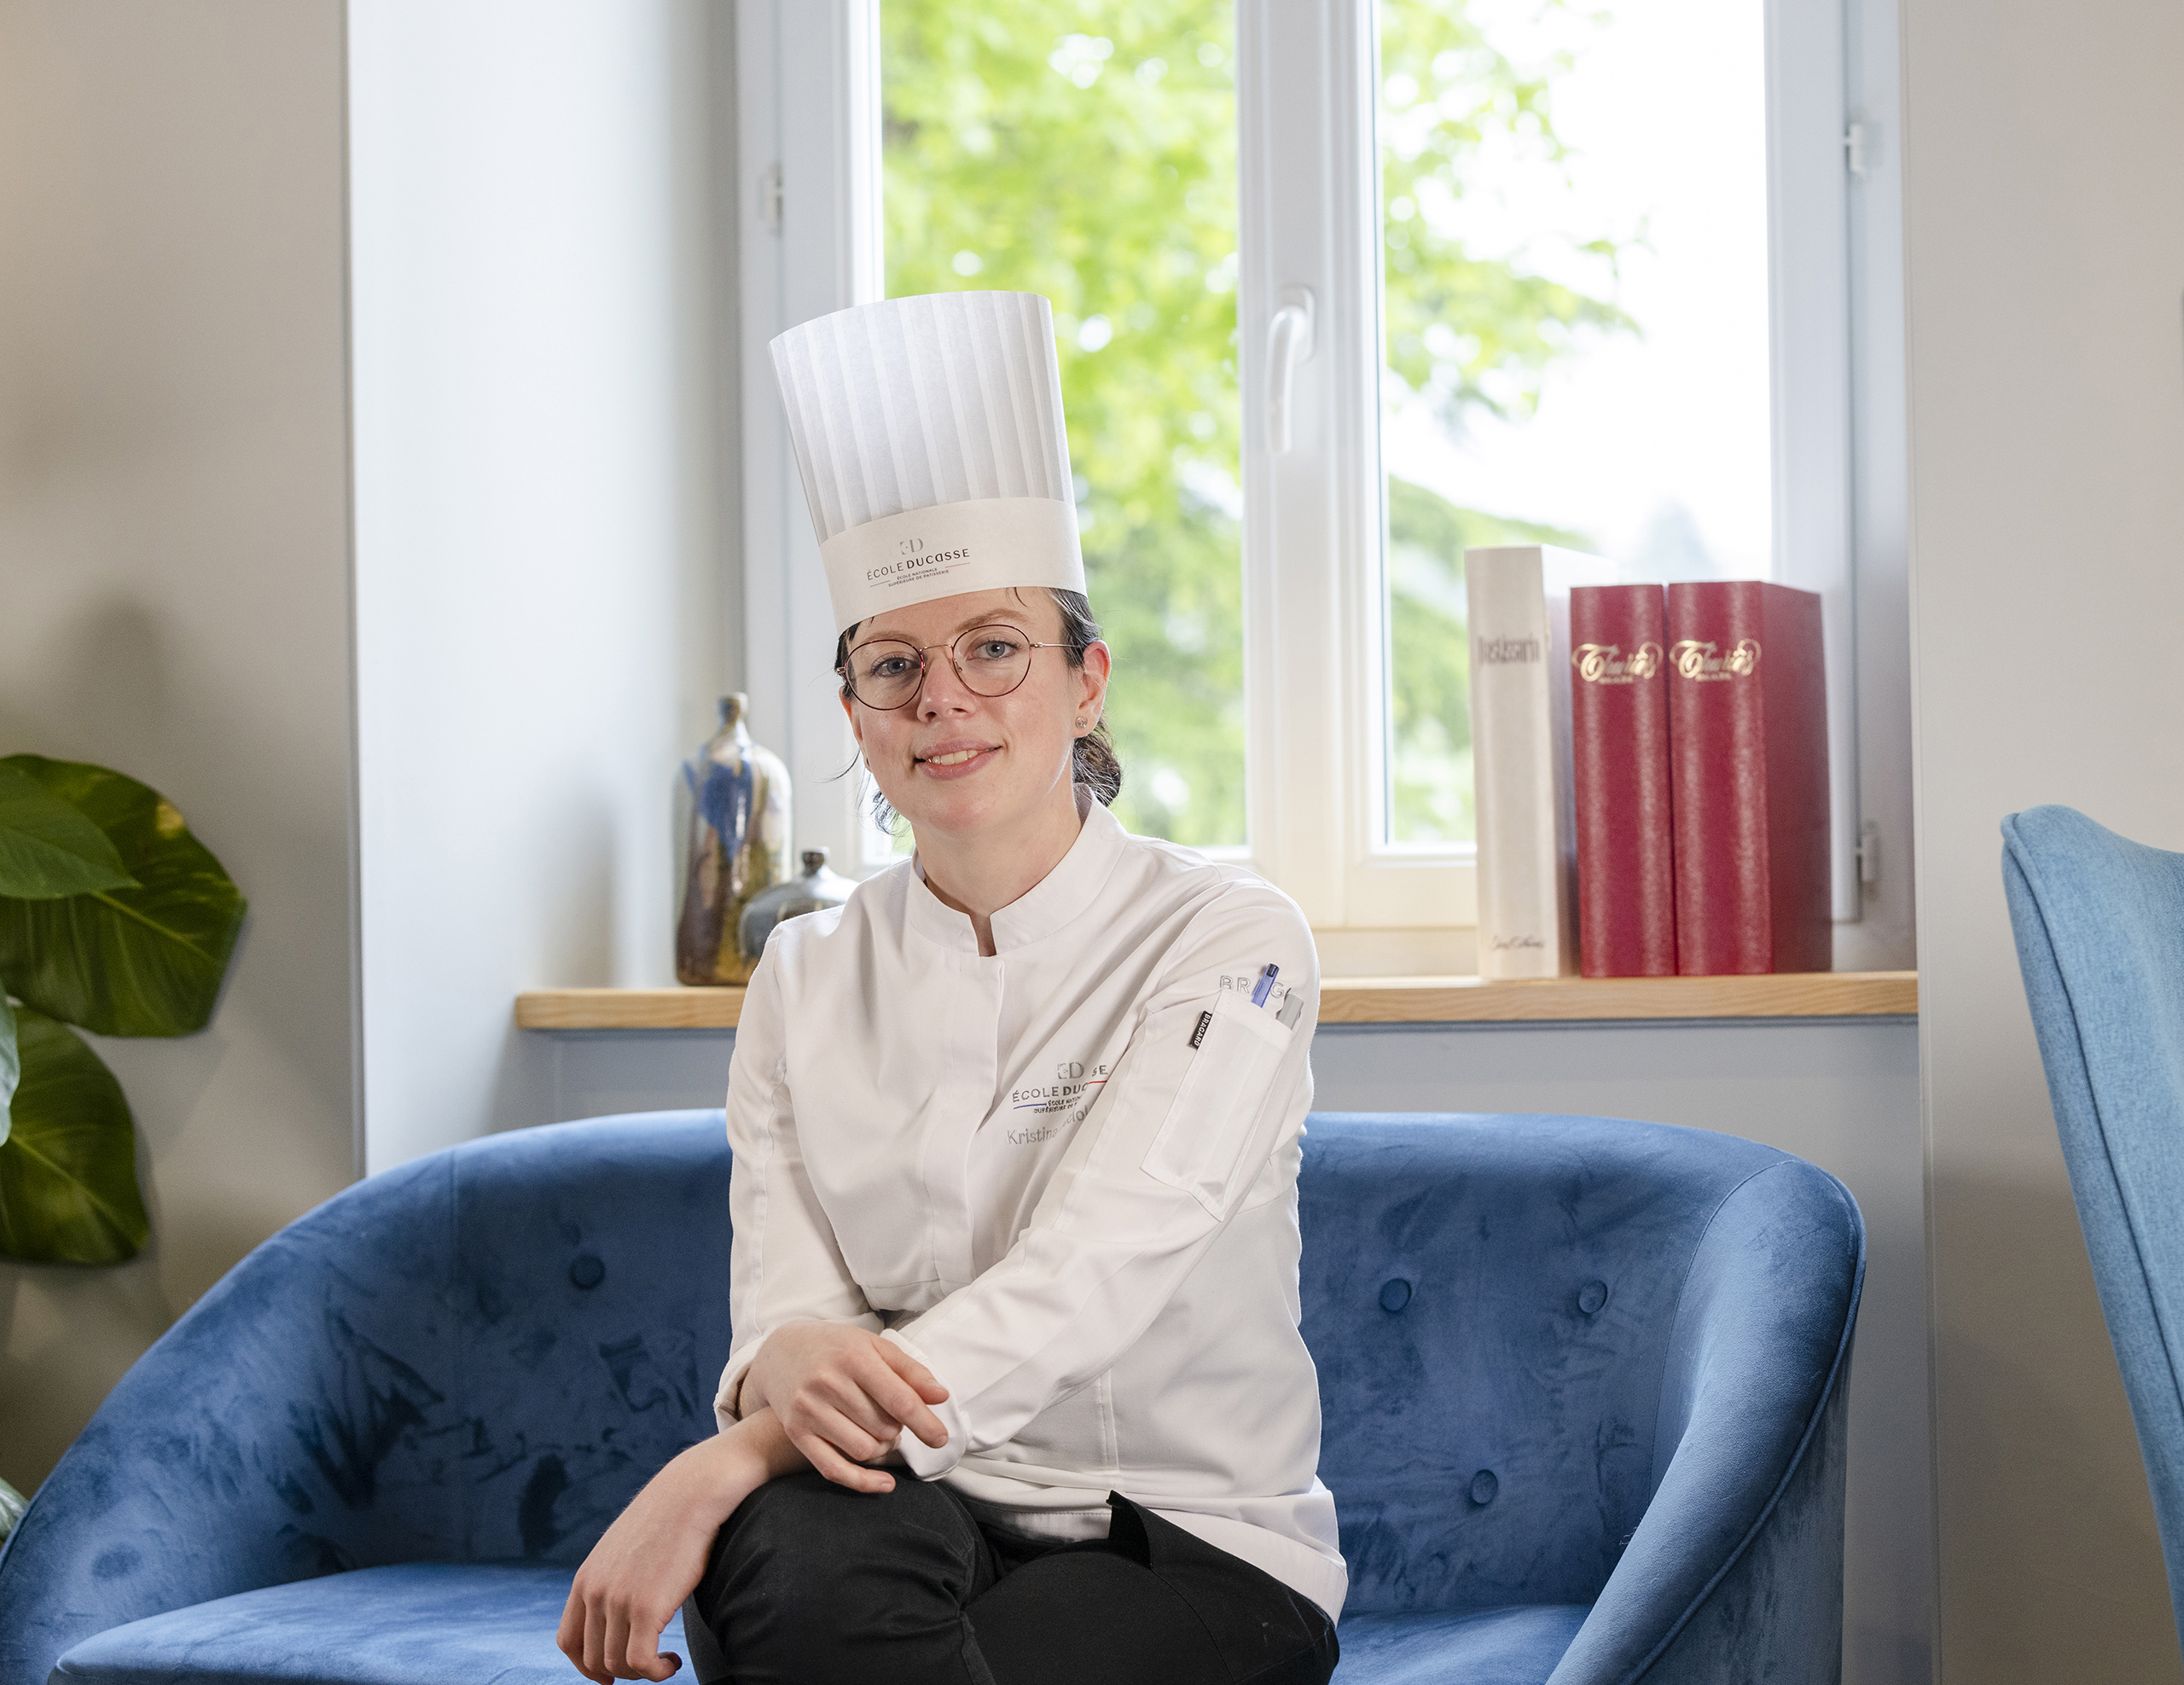 Pastry chef teacher at École Ducasse